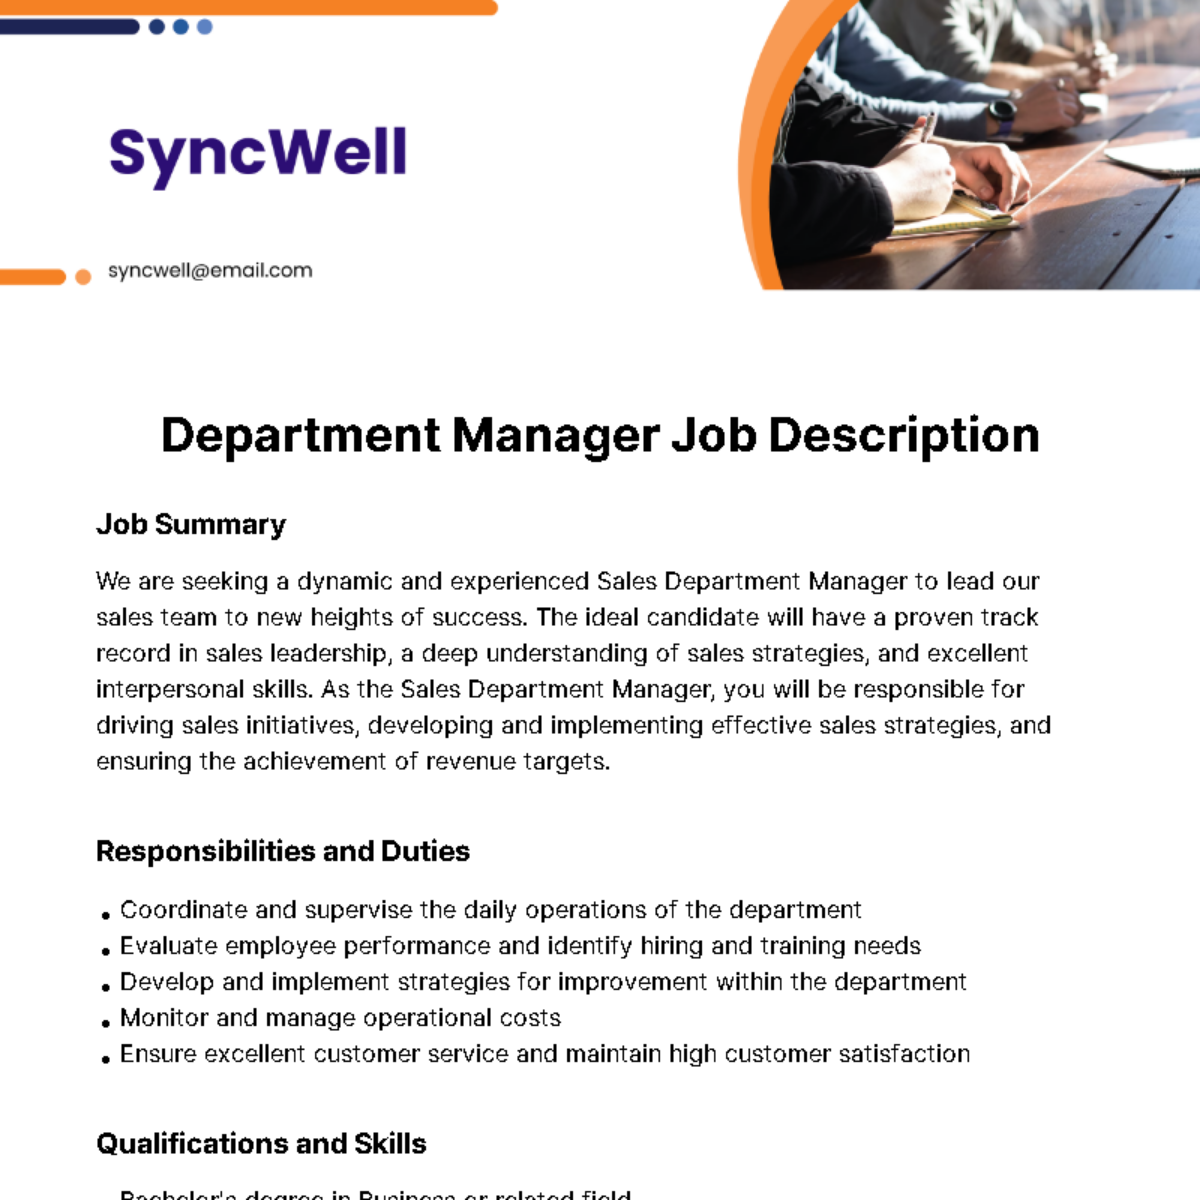 Department Manager Job Description Template